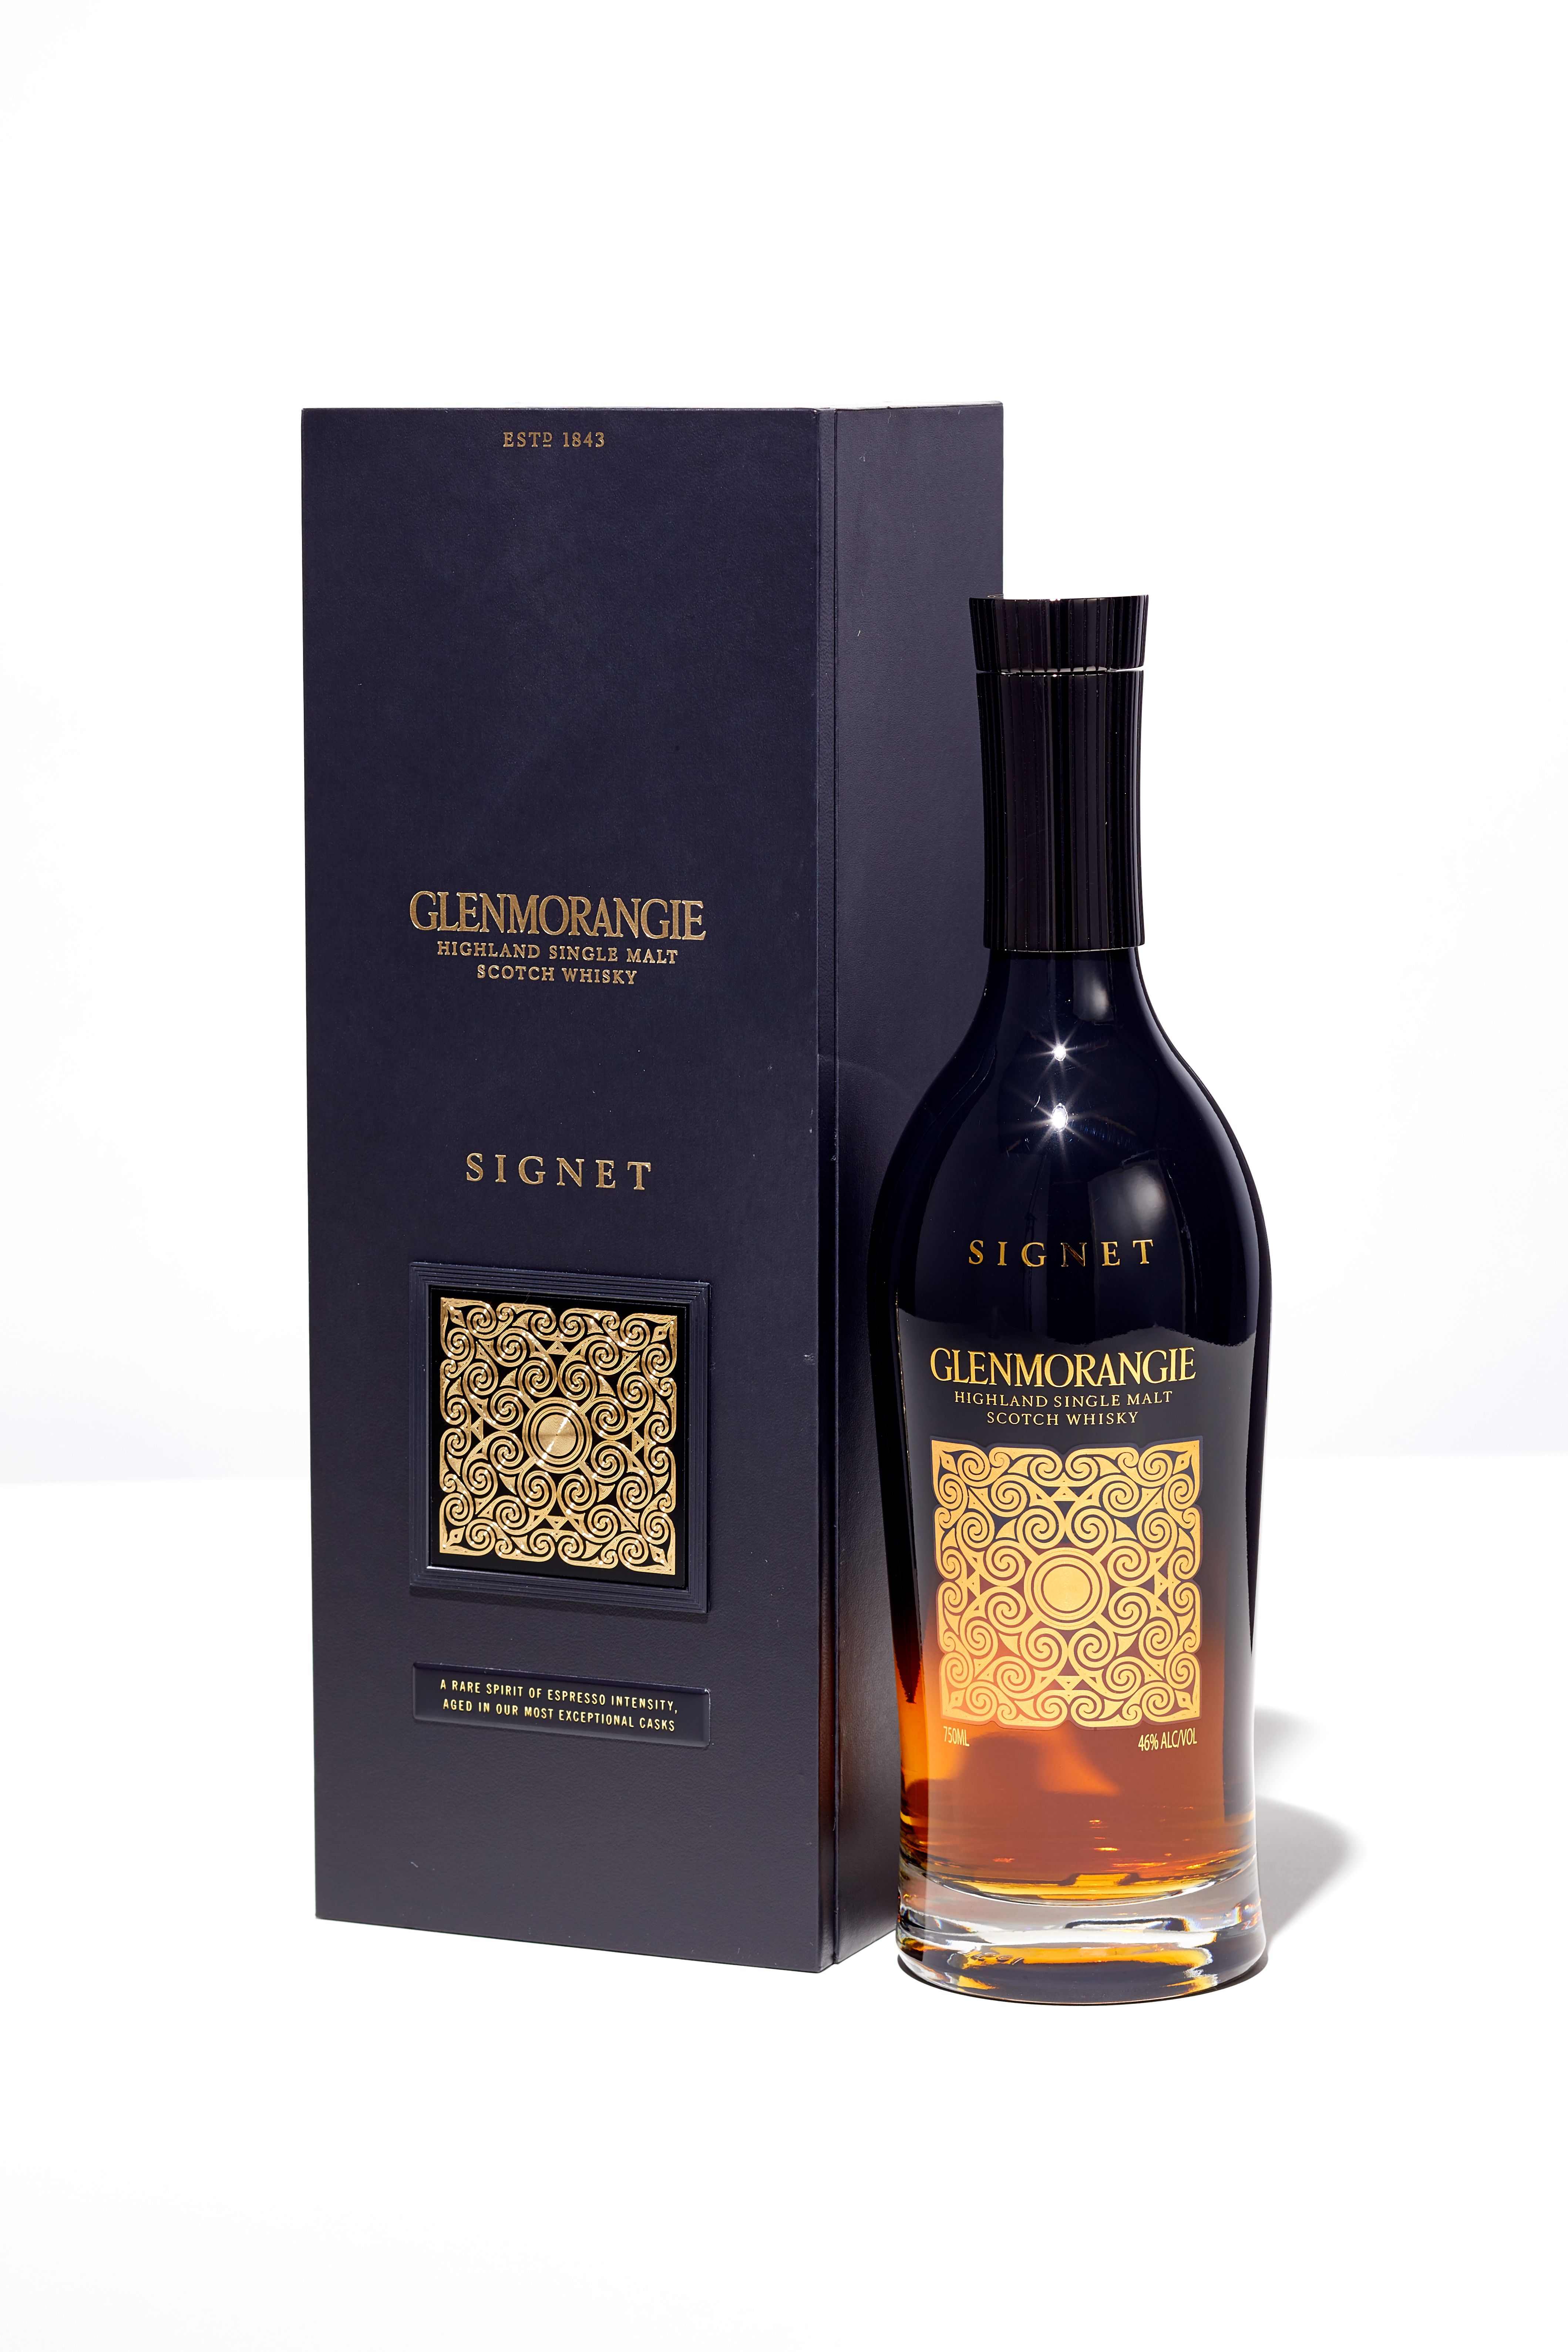 Glenmorangie Signet Highland Single Malt Scotch